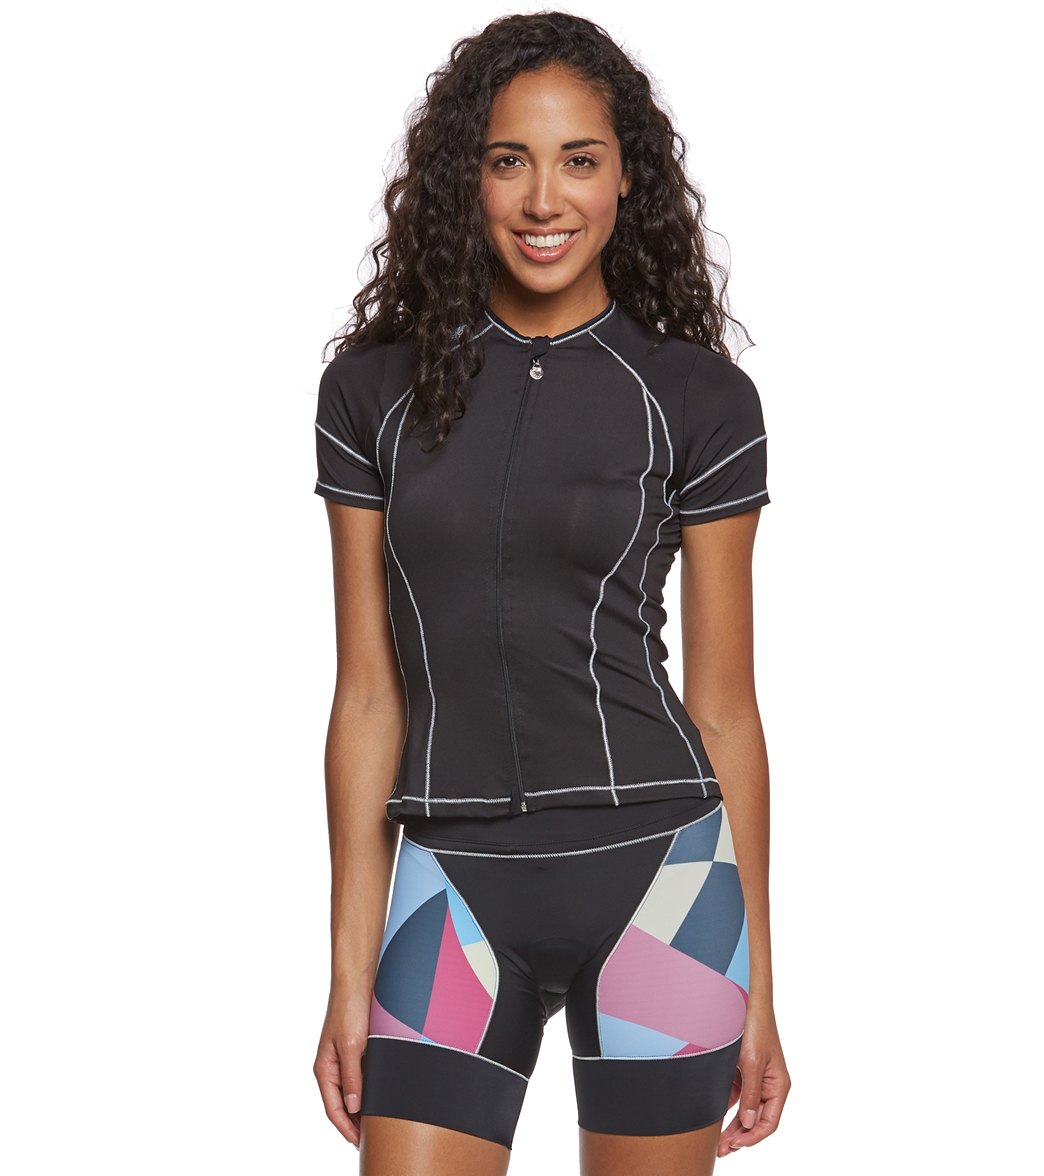 Desoto Femme Skin Cooler Short Sleeve Tri Top - Black Small - Swimoutlet.com